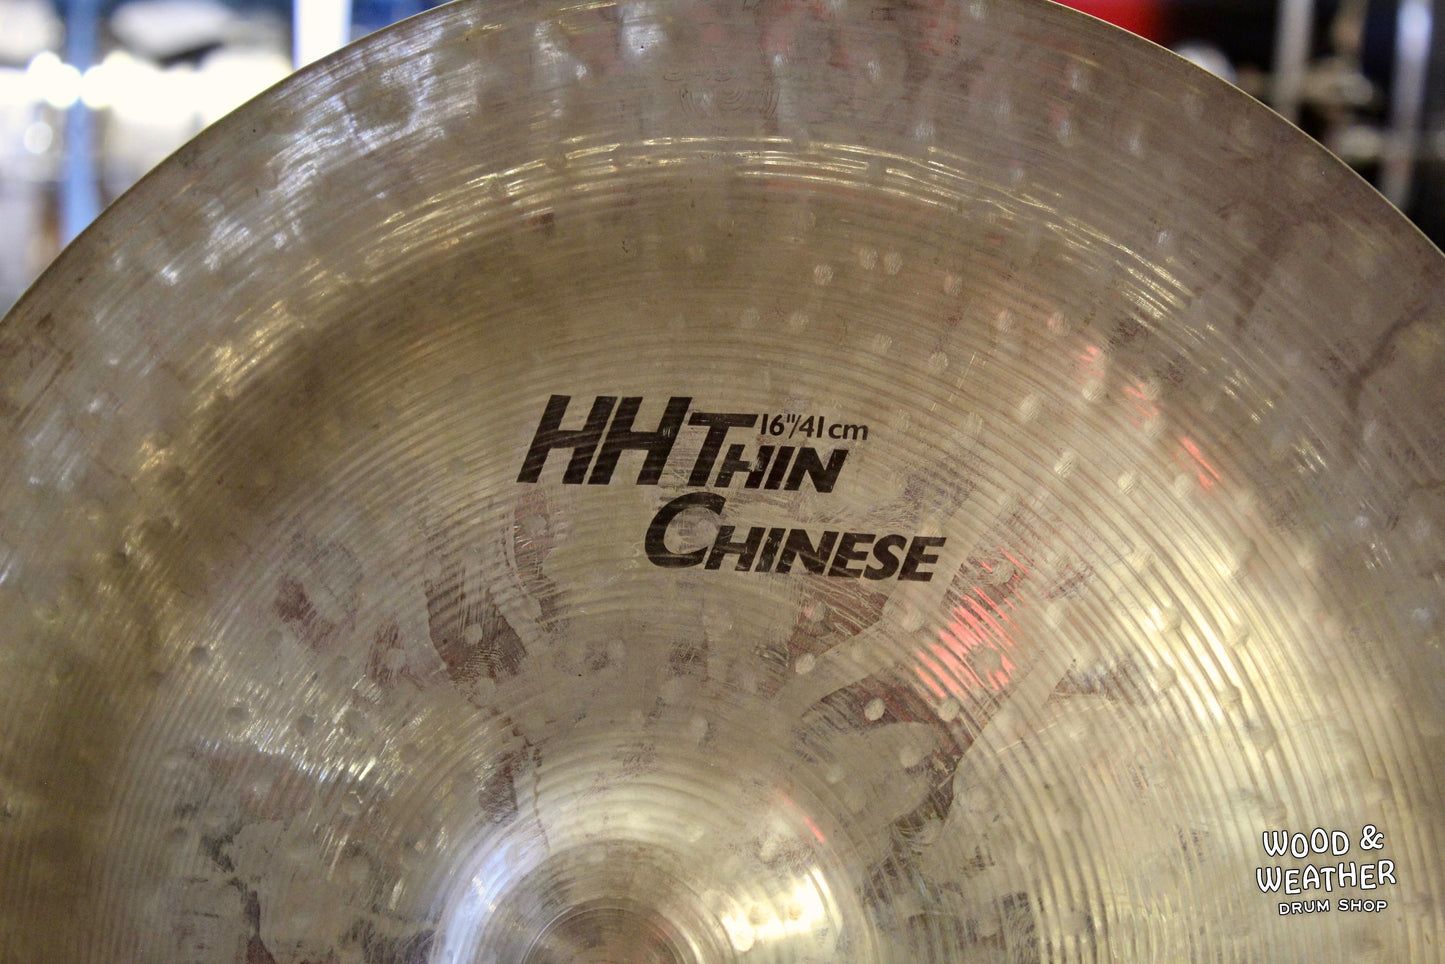 Used Sabian 16" HH Thin Chinese Cymbal 855g